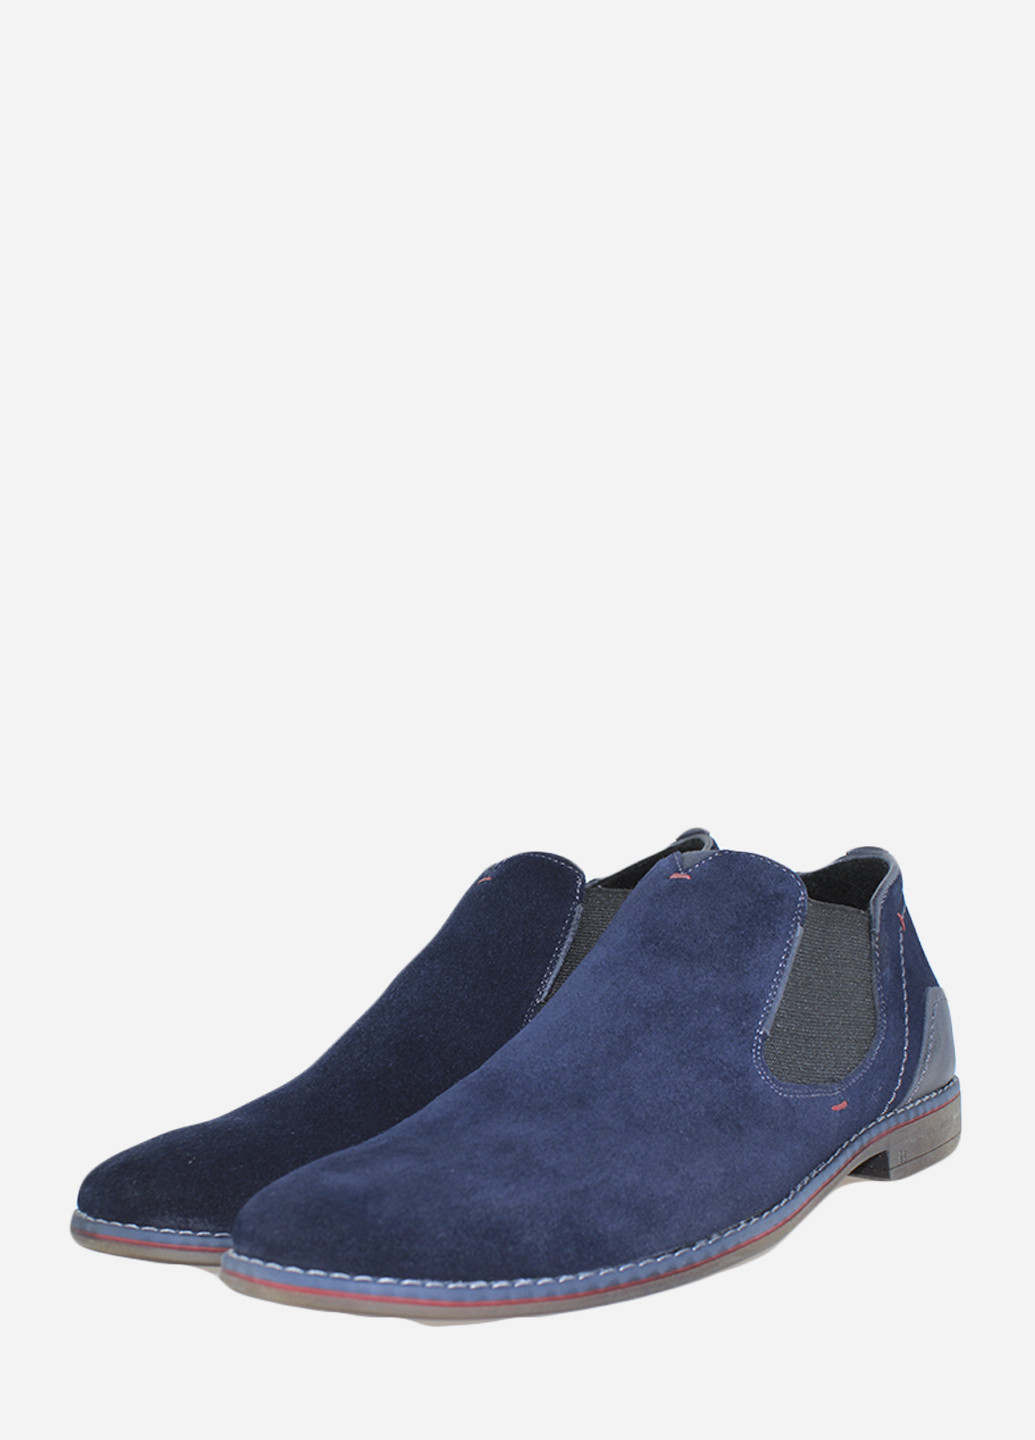 Синие осенние ботинки rv3515-098-11 синий Veber Design